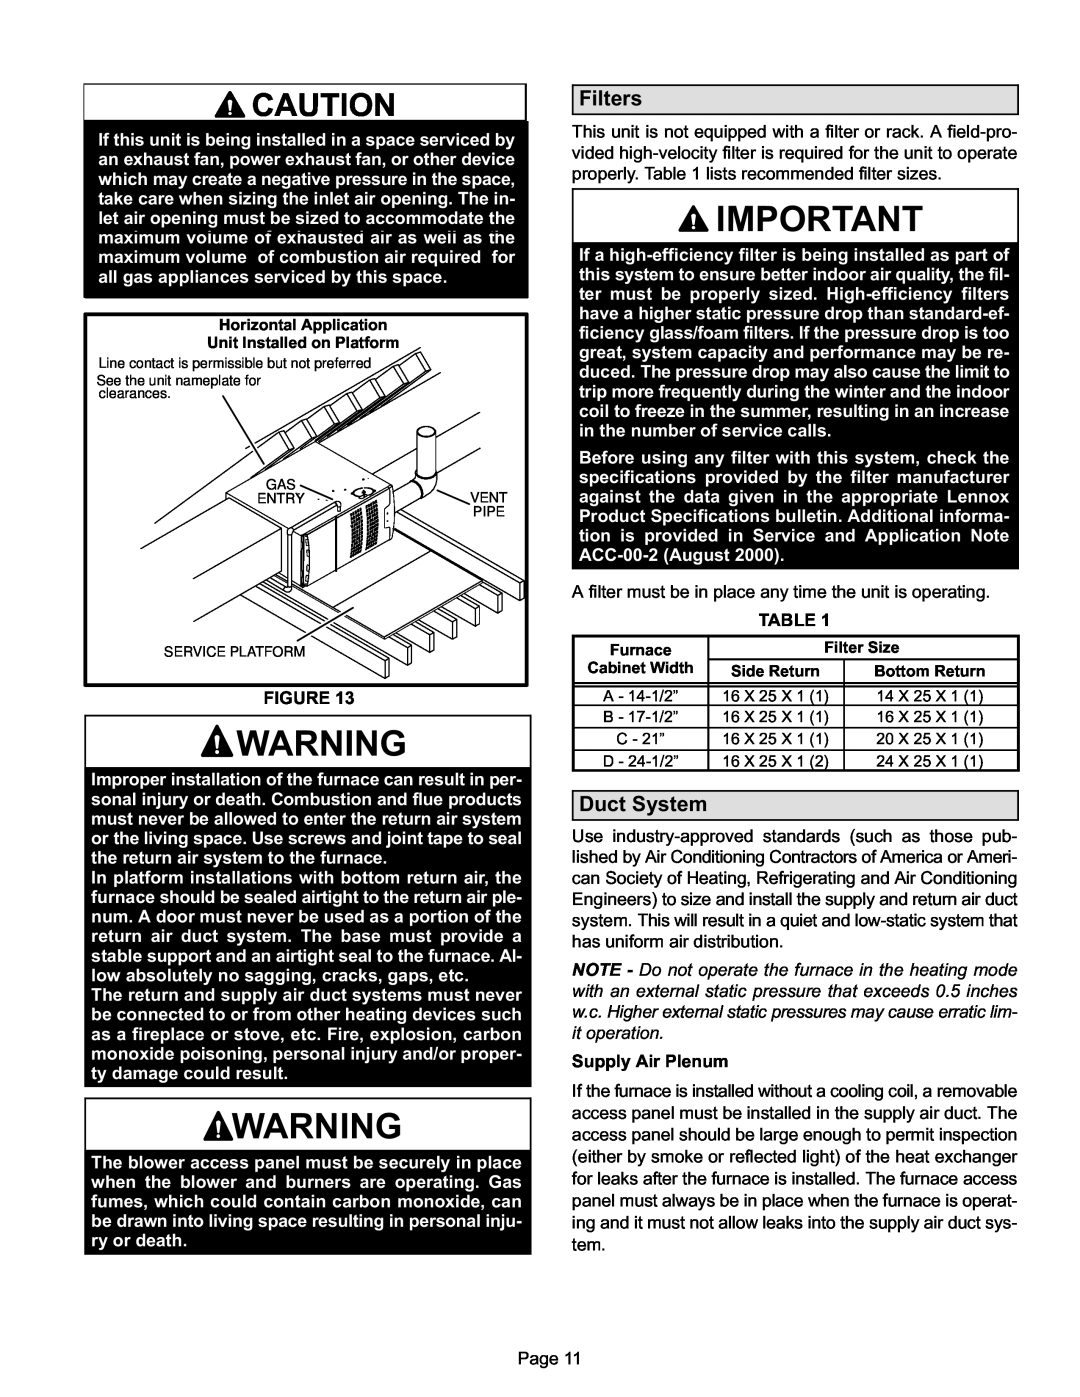 Lennox International Inc EL180UHE installation instructions Filters, Duct System, Supply Air Plenum 